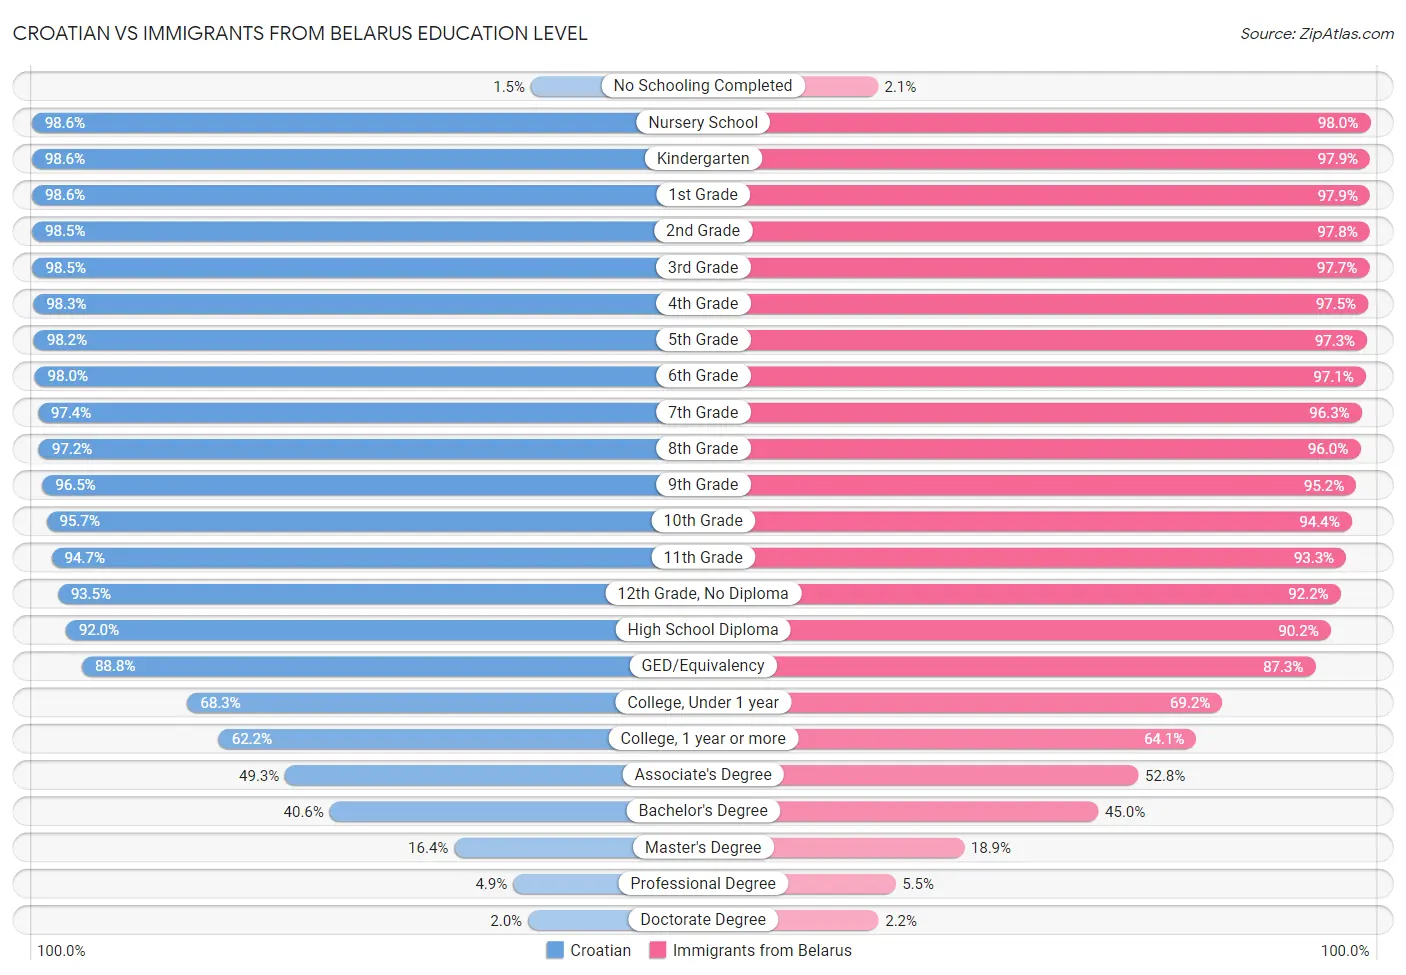 Croatian vs Immigrants from Belarus Education Level